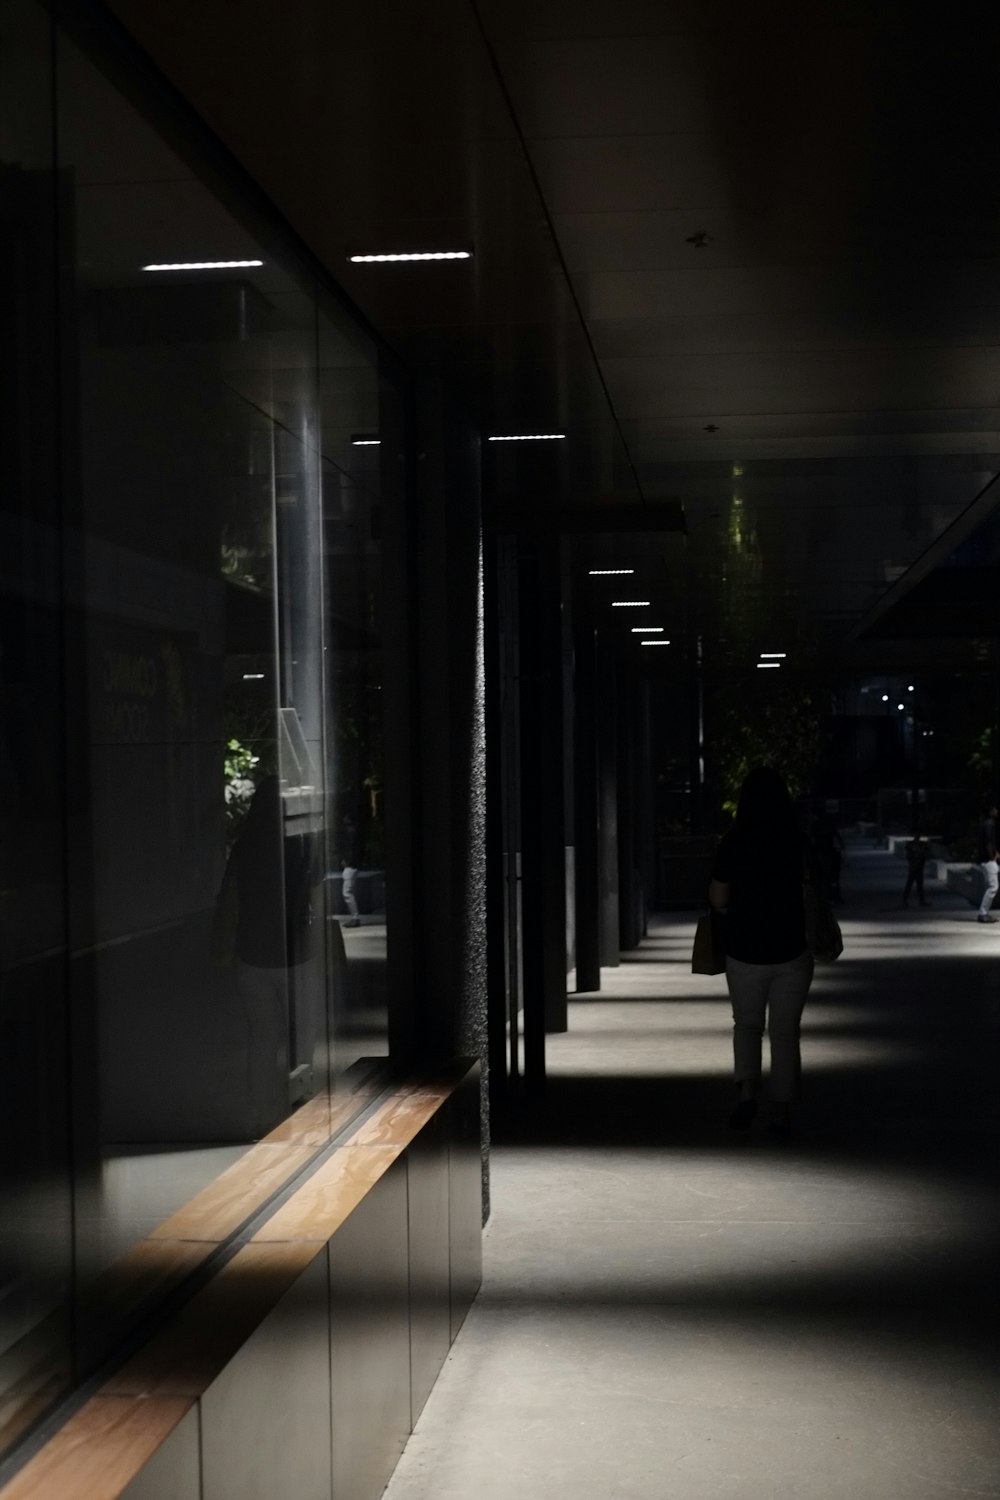 a person walking down a hallway in the dark